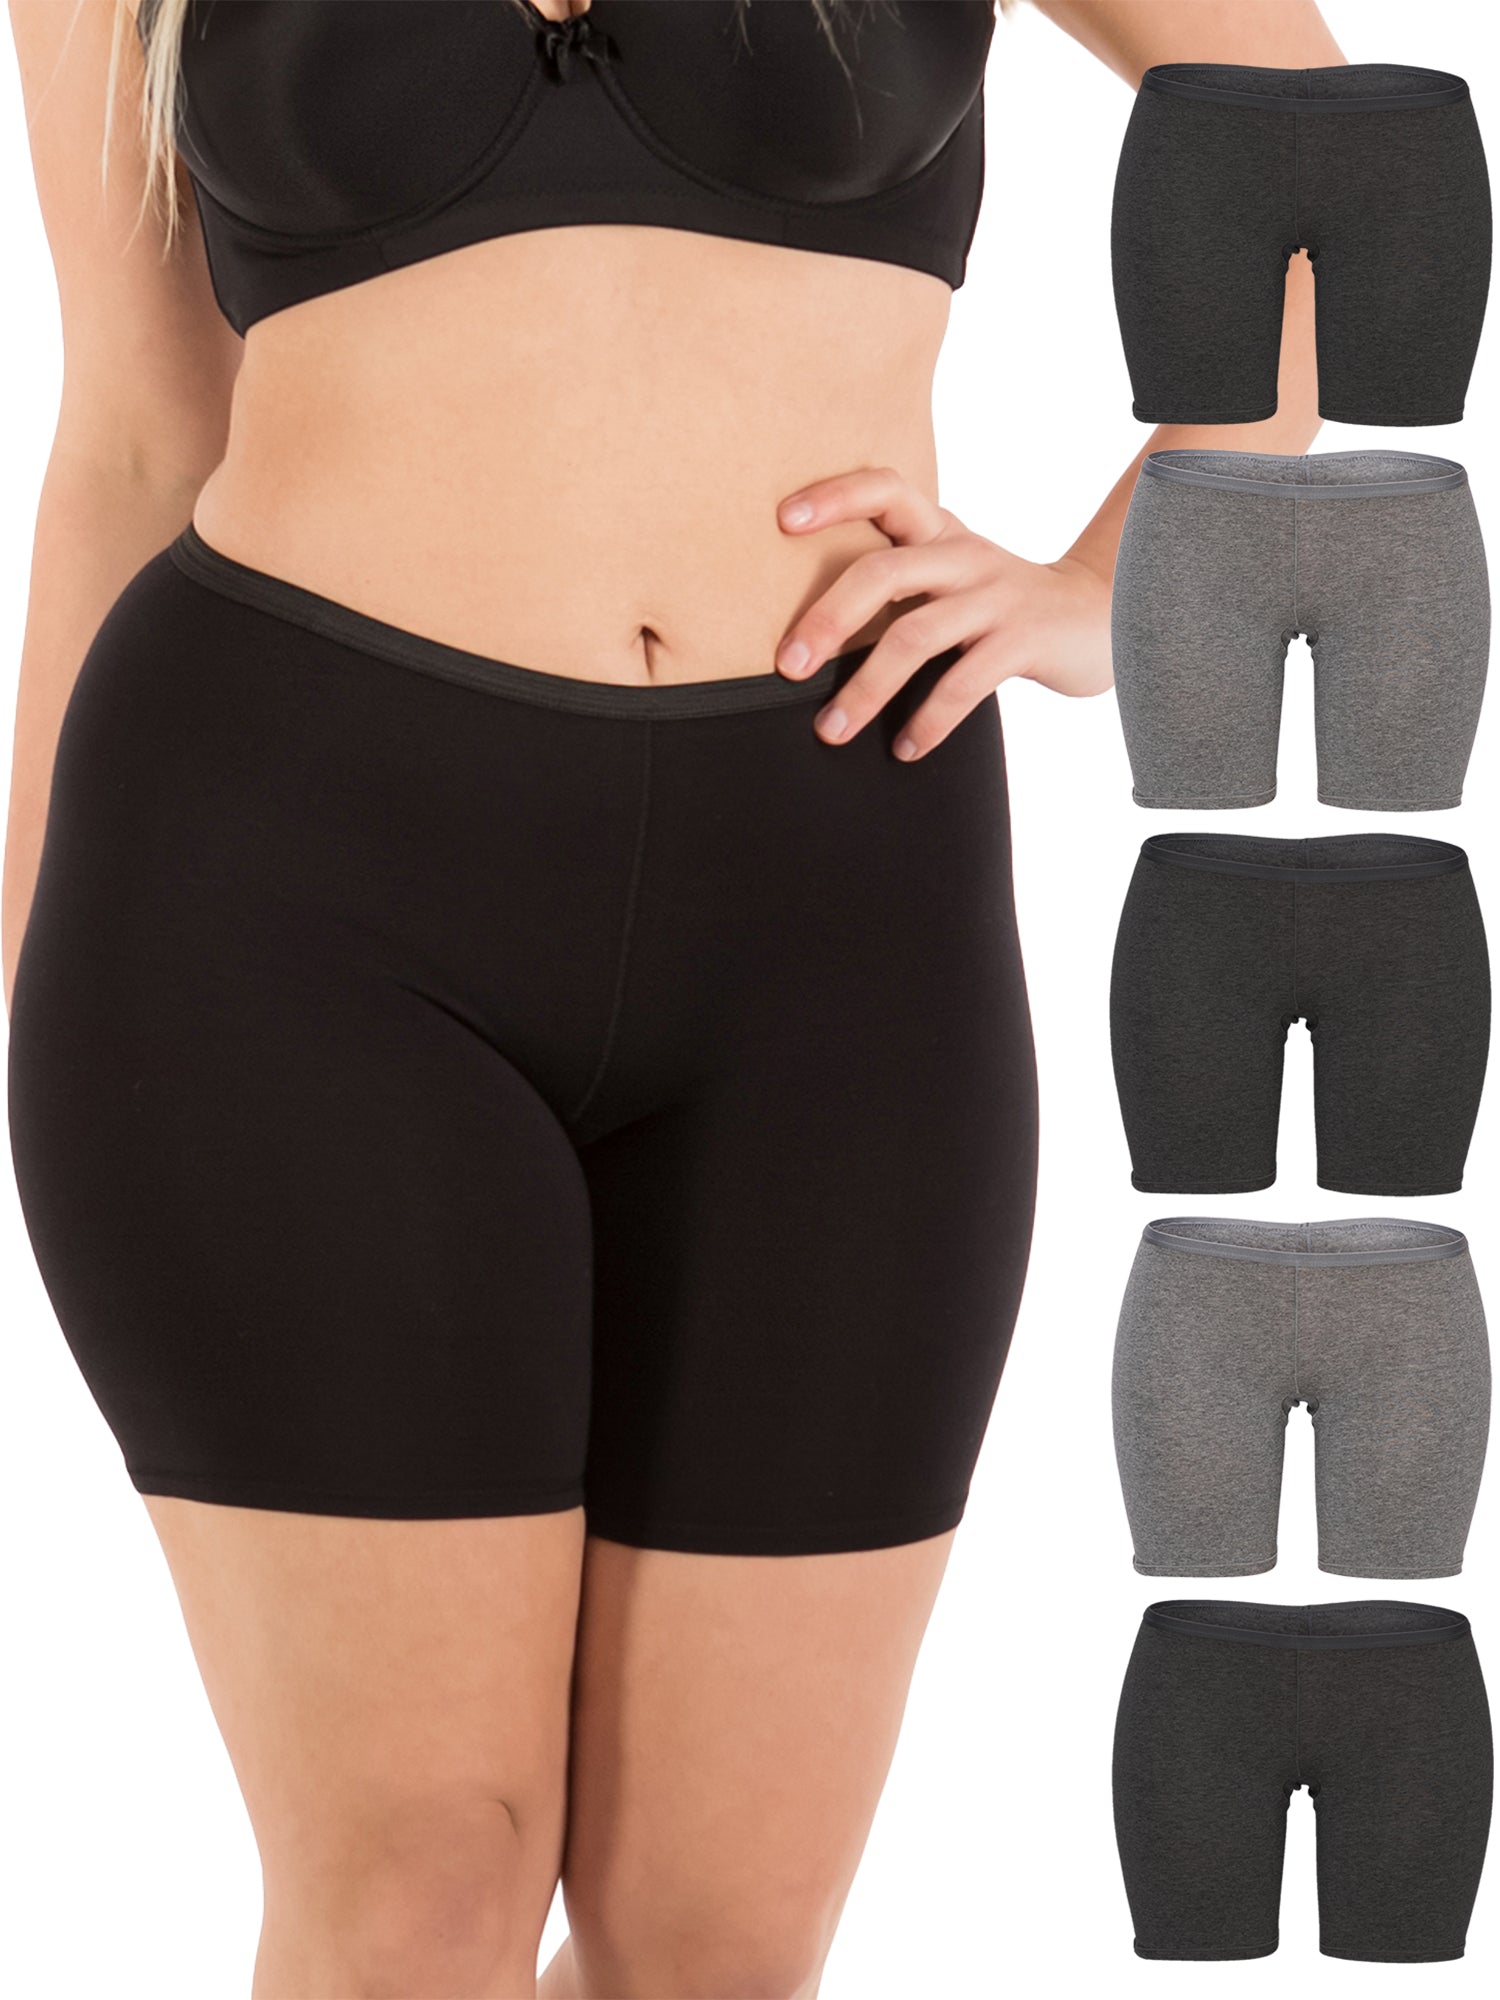 B2BODY Underwear Women Organic Cotton Boyshort Brief Panties S-4XL